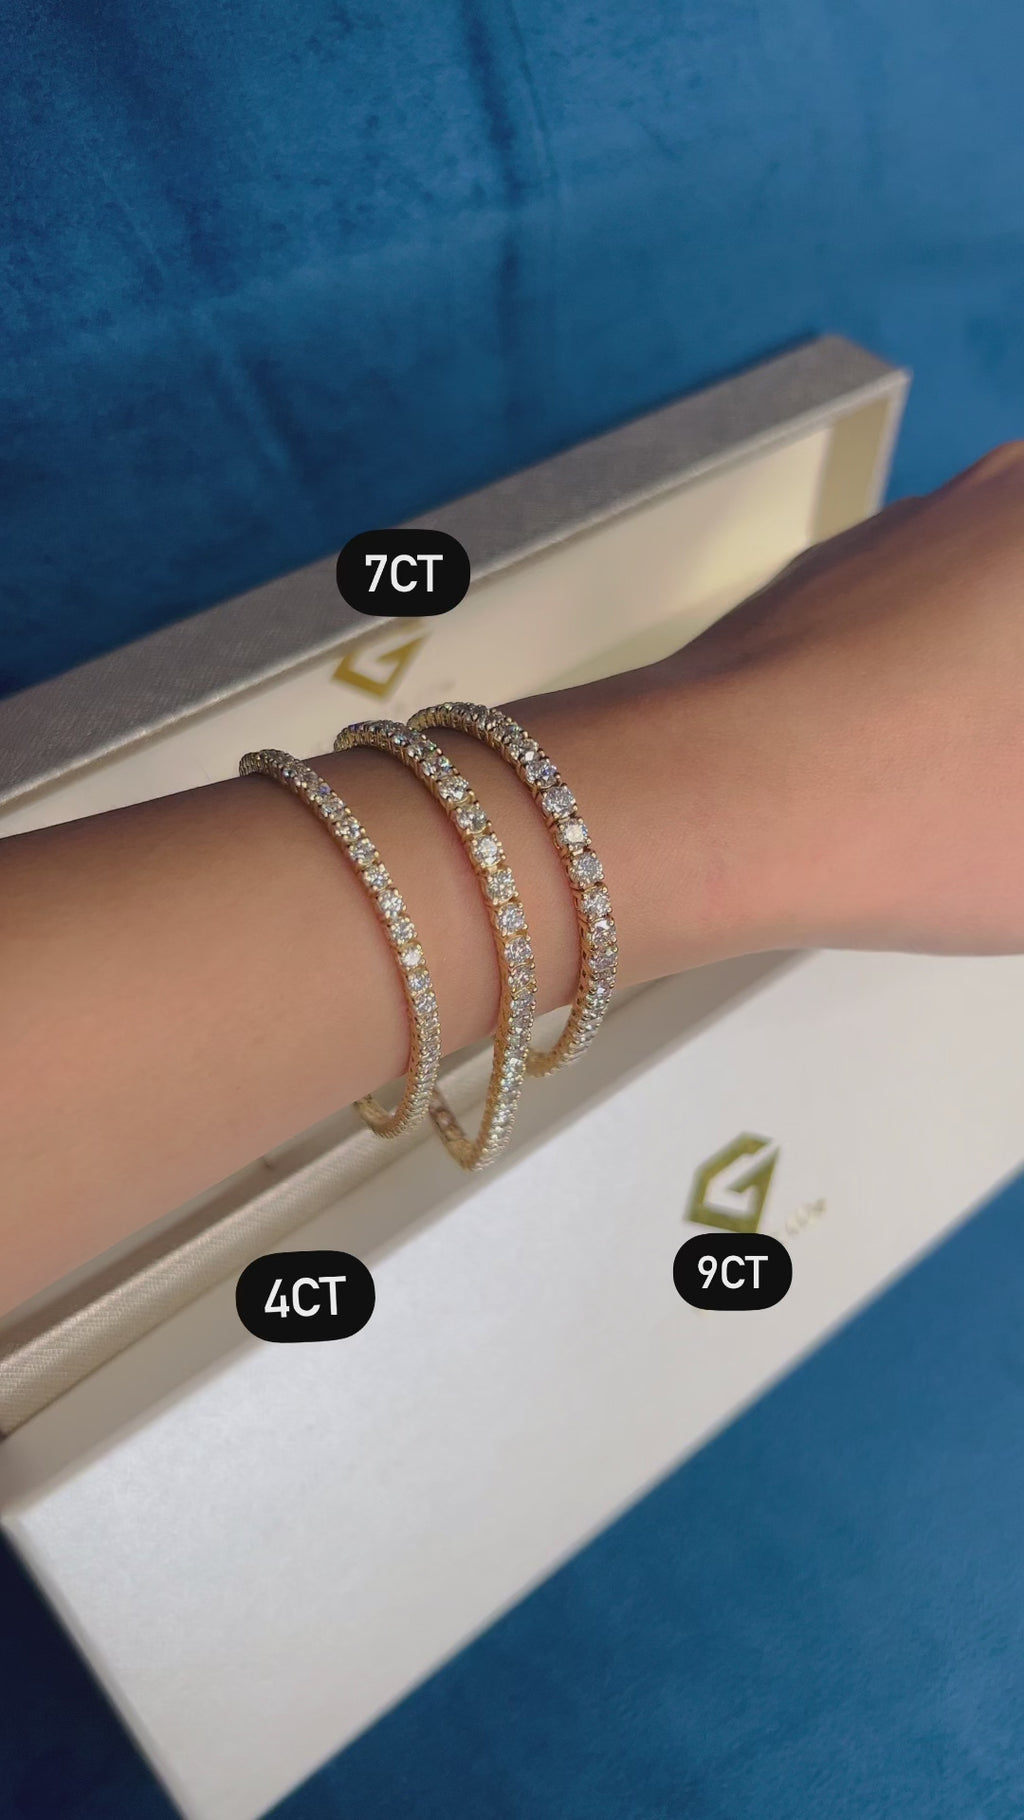 h samuel sterling silver T Bar Necklace And Bracelet Cz Set Boxed New | eBay